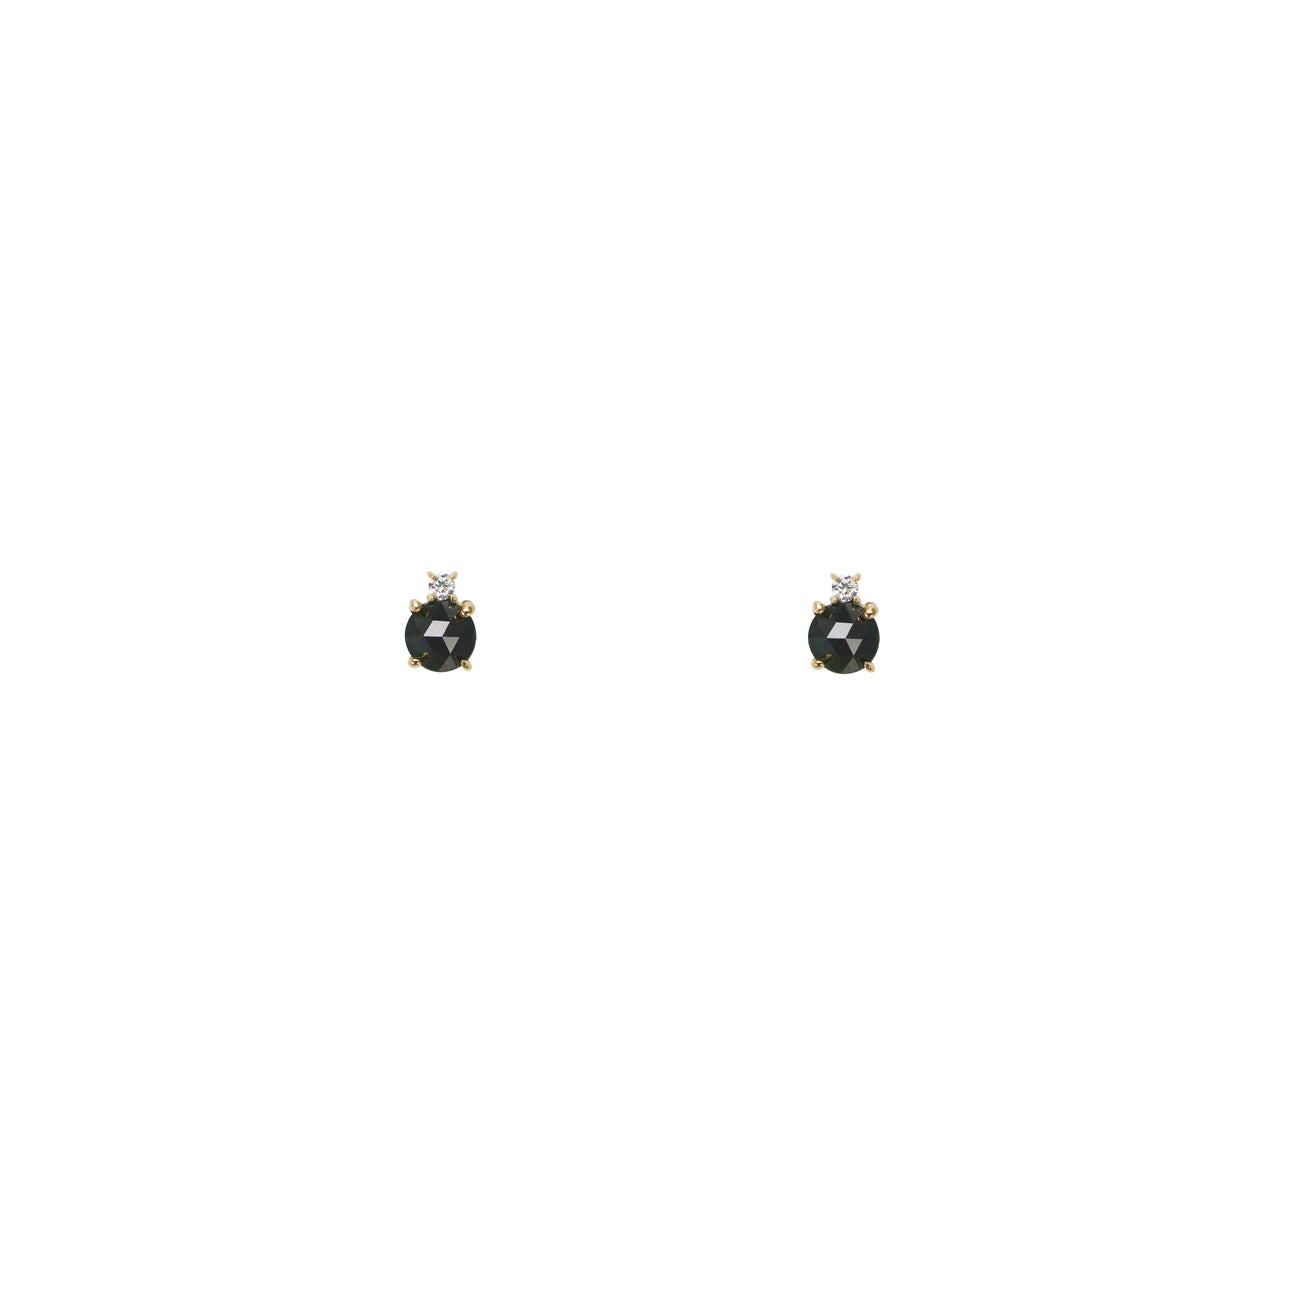 black white diamond gold stud earrings PRE 157 BD_f970e012 3b41 4217 9c01 bab4dc8f22a2